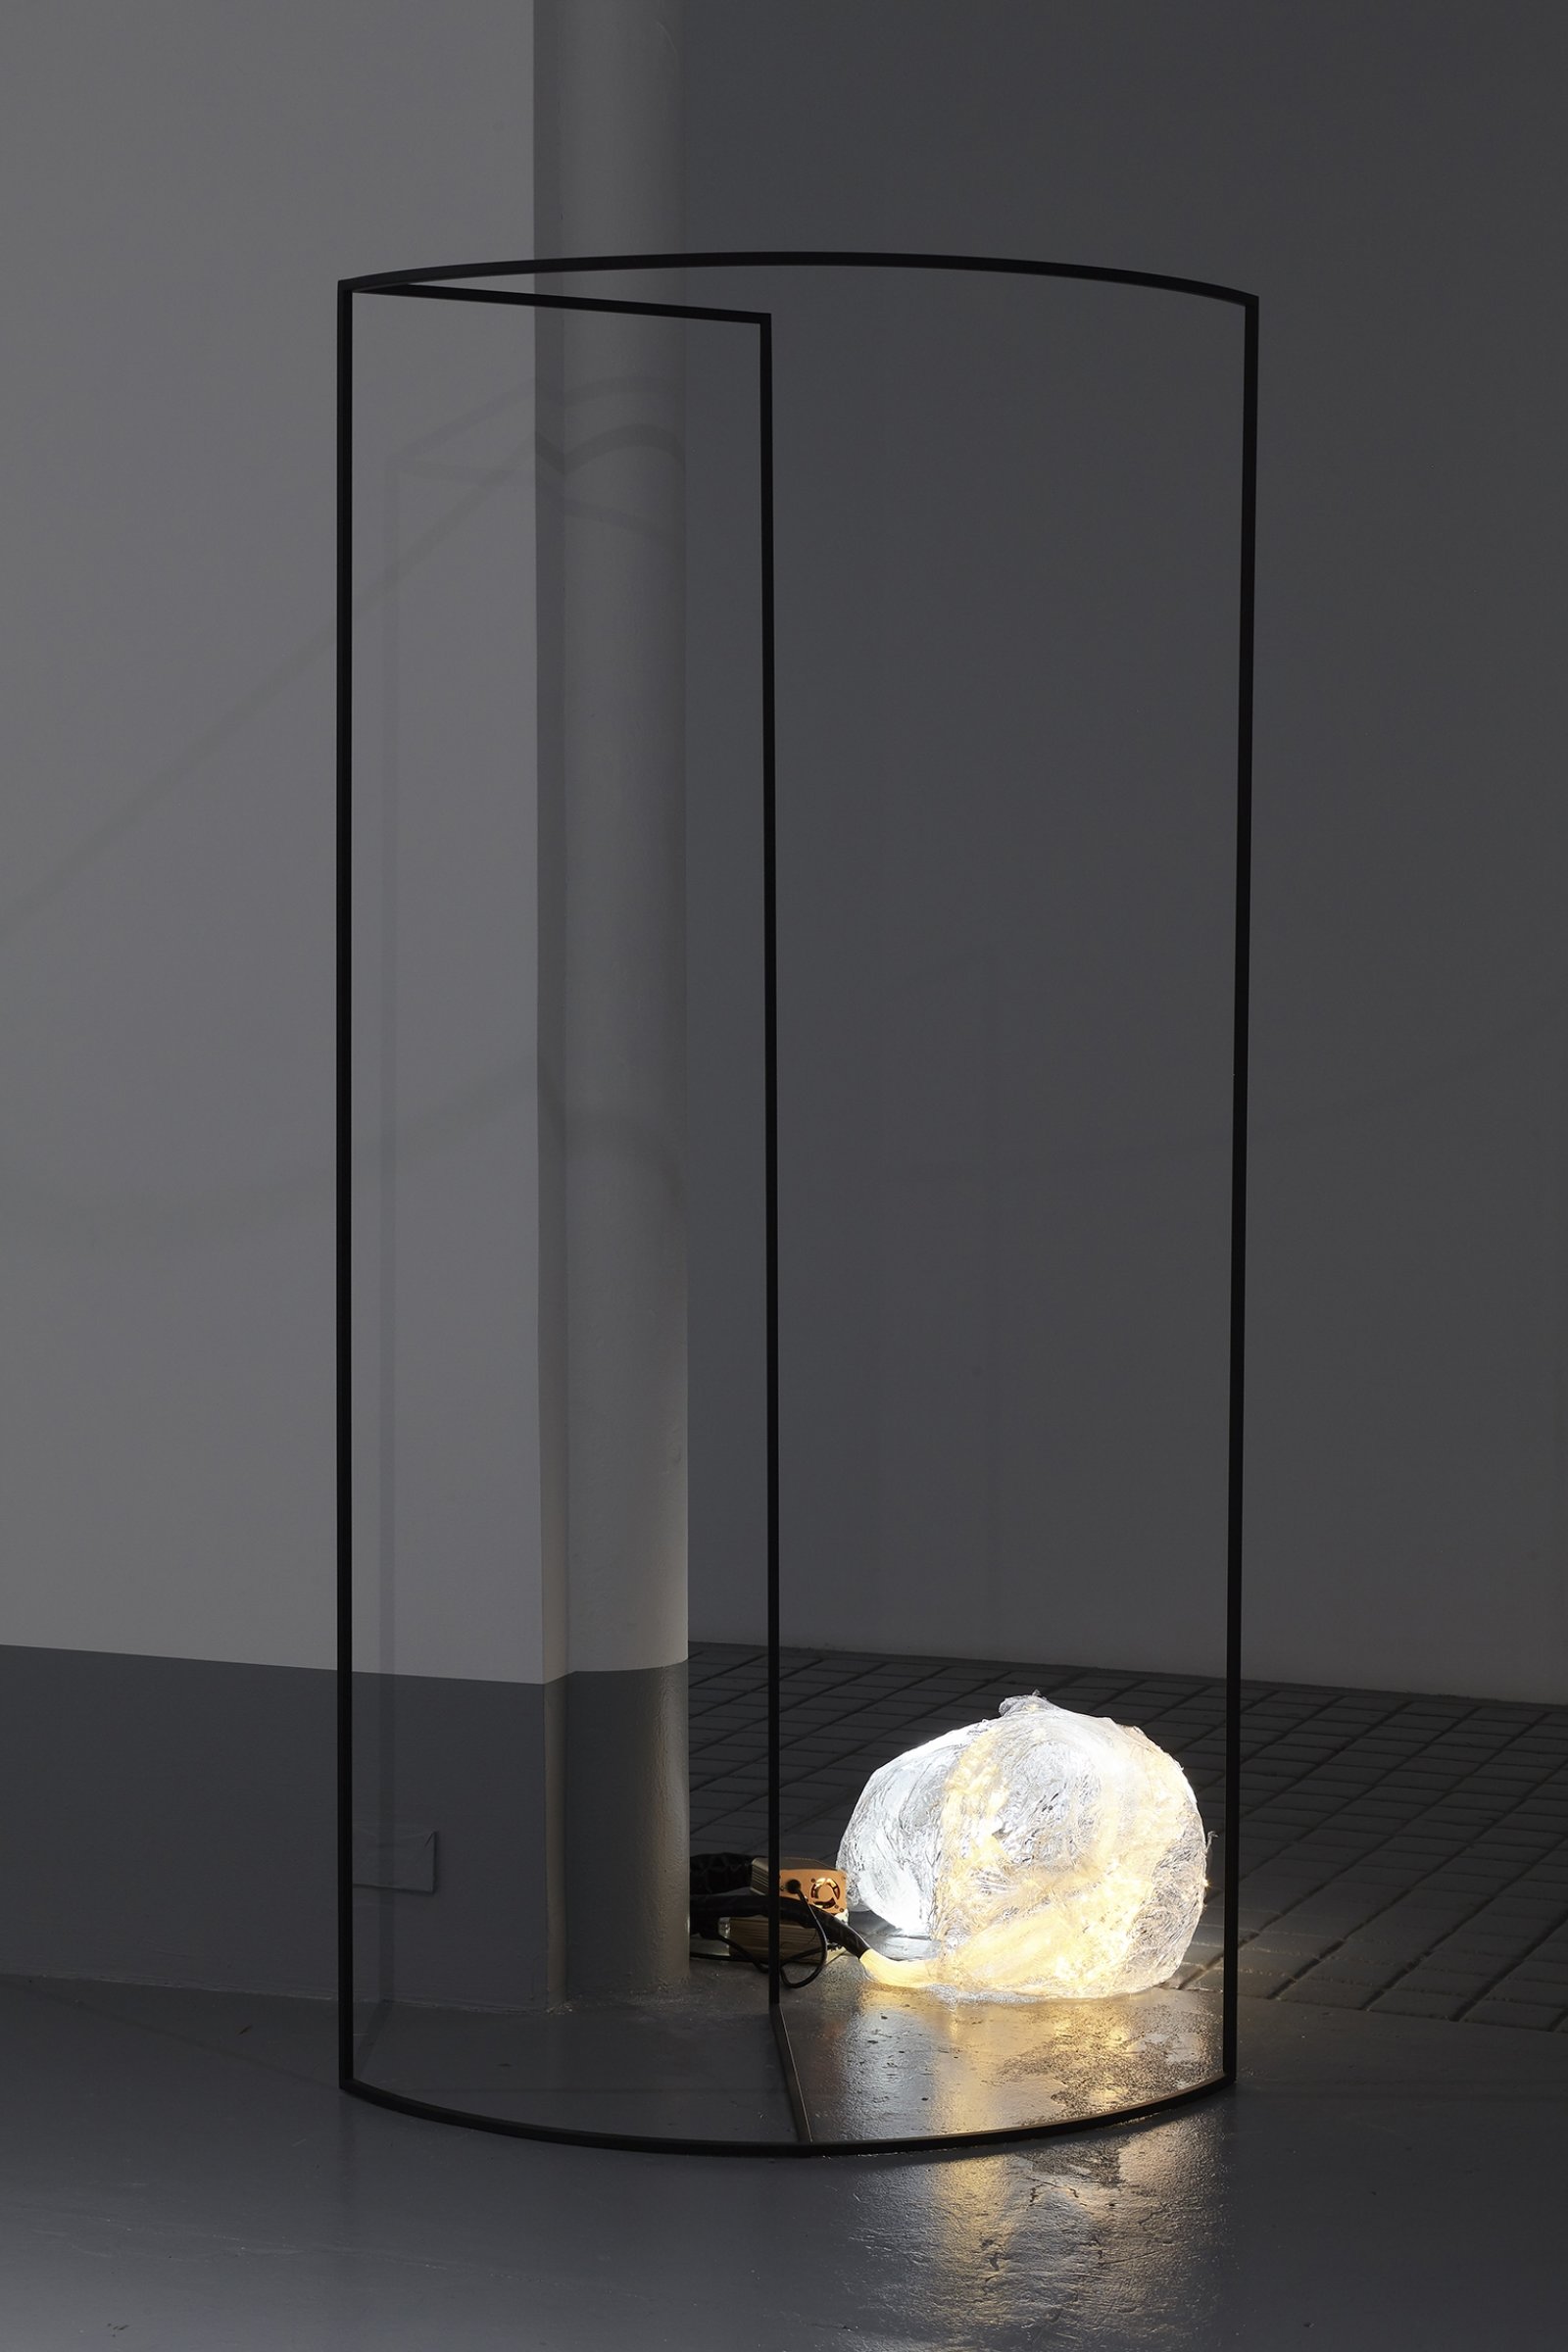 Rochelle Goldberg, “Thus a bony cavernous circuit encloses the eye”, 2017, fibre-optic LED wire, plexi resin, steel frame, 80 x 41 x 23 in. (203 x 104 x 58 cm). Installation view, Intralocutors, Miguel Abreu Gallery, New York, USA, 2017